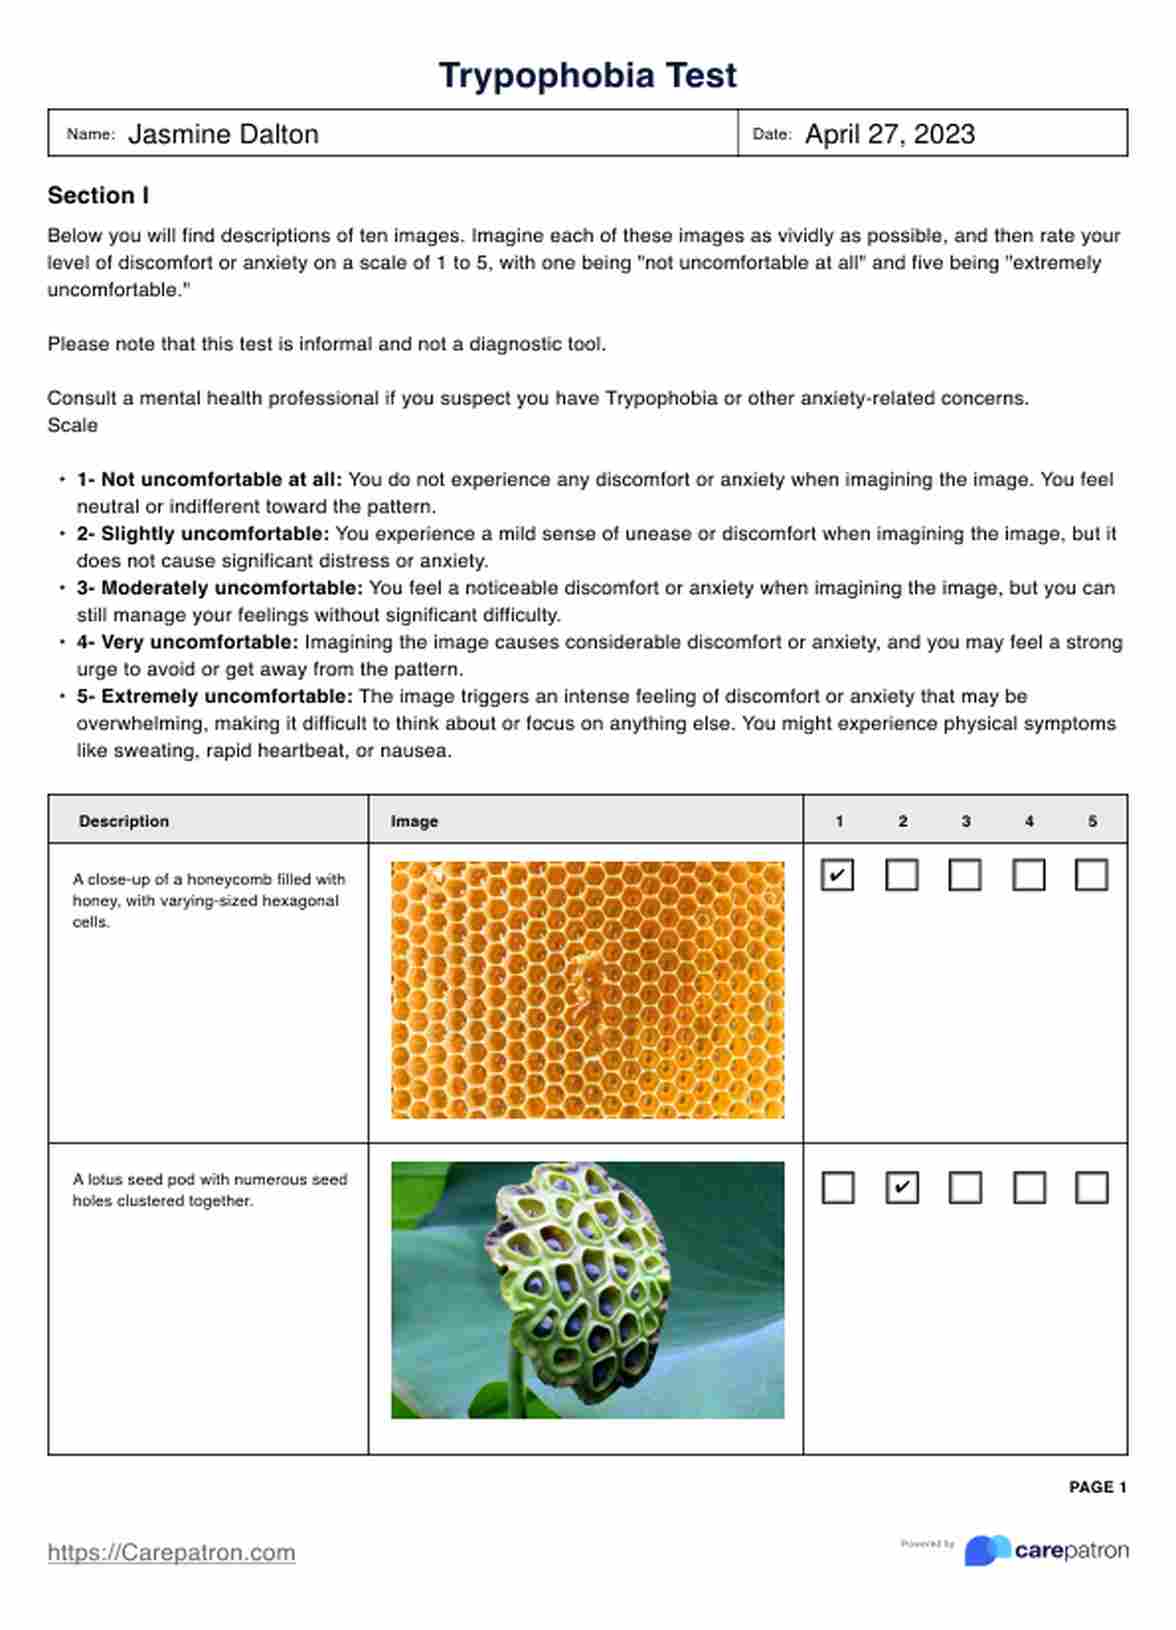 Trypophobia Test PDF Example